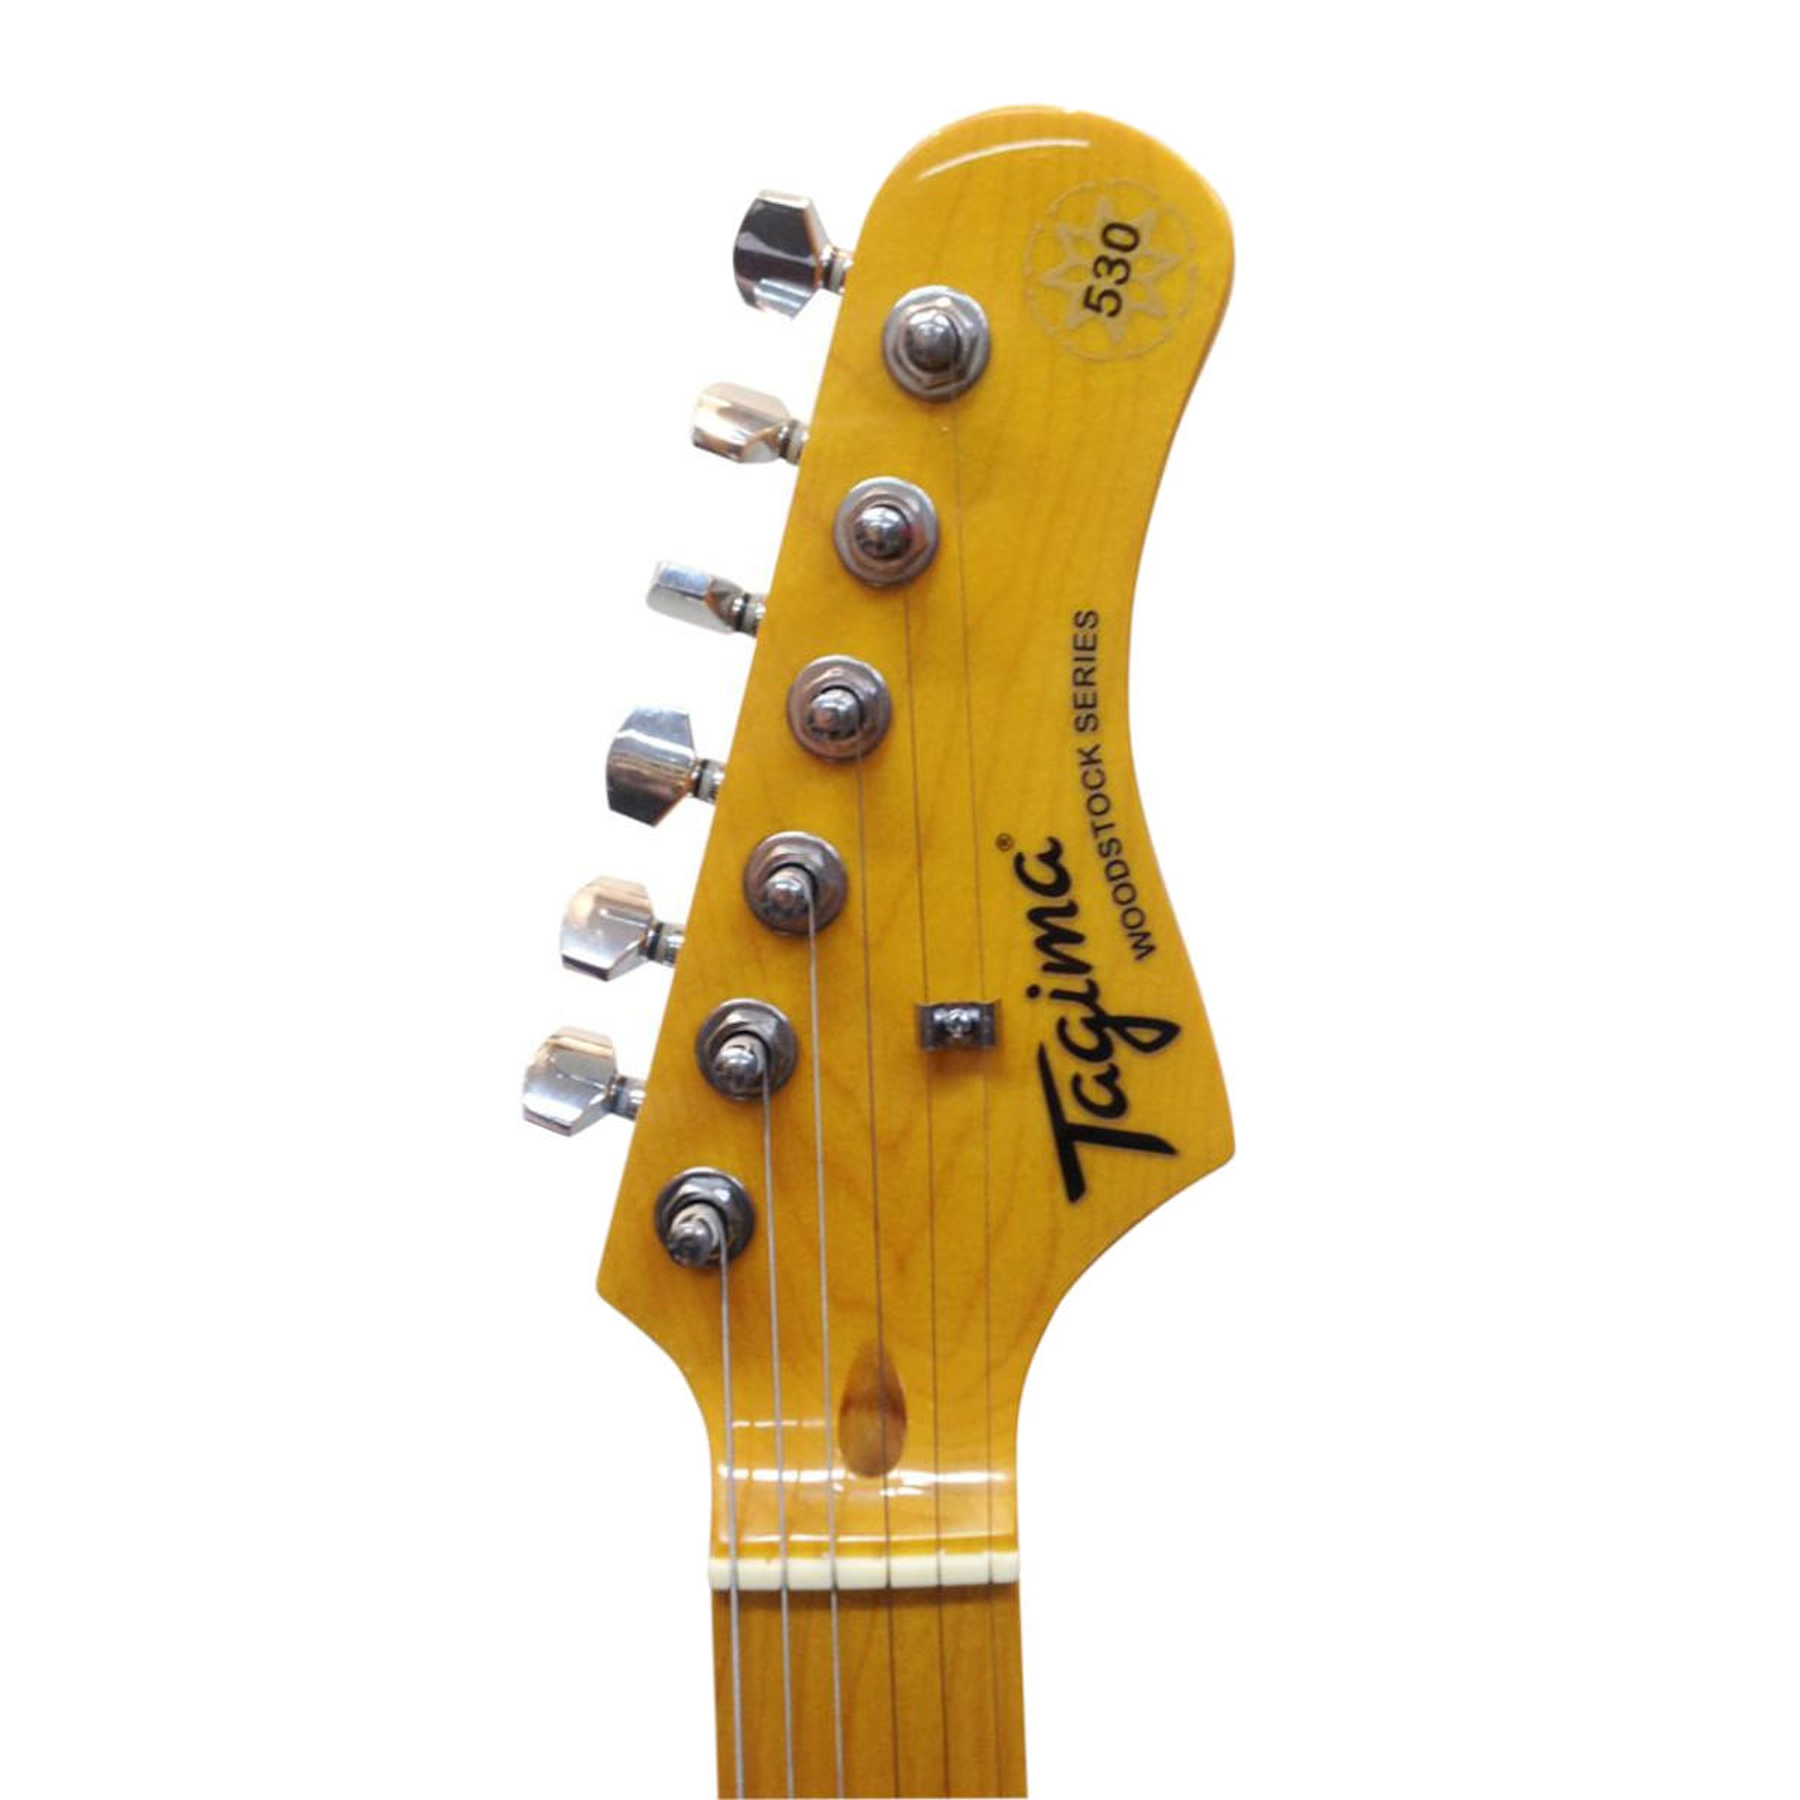 Guitarra Electrica Tagima TG-530 Metallic Red